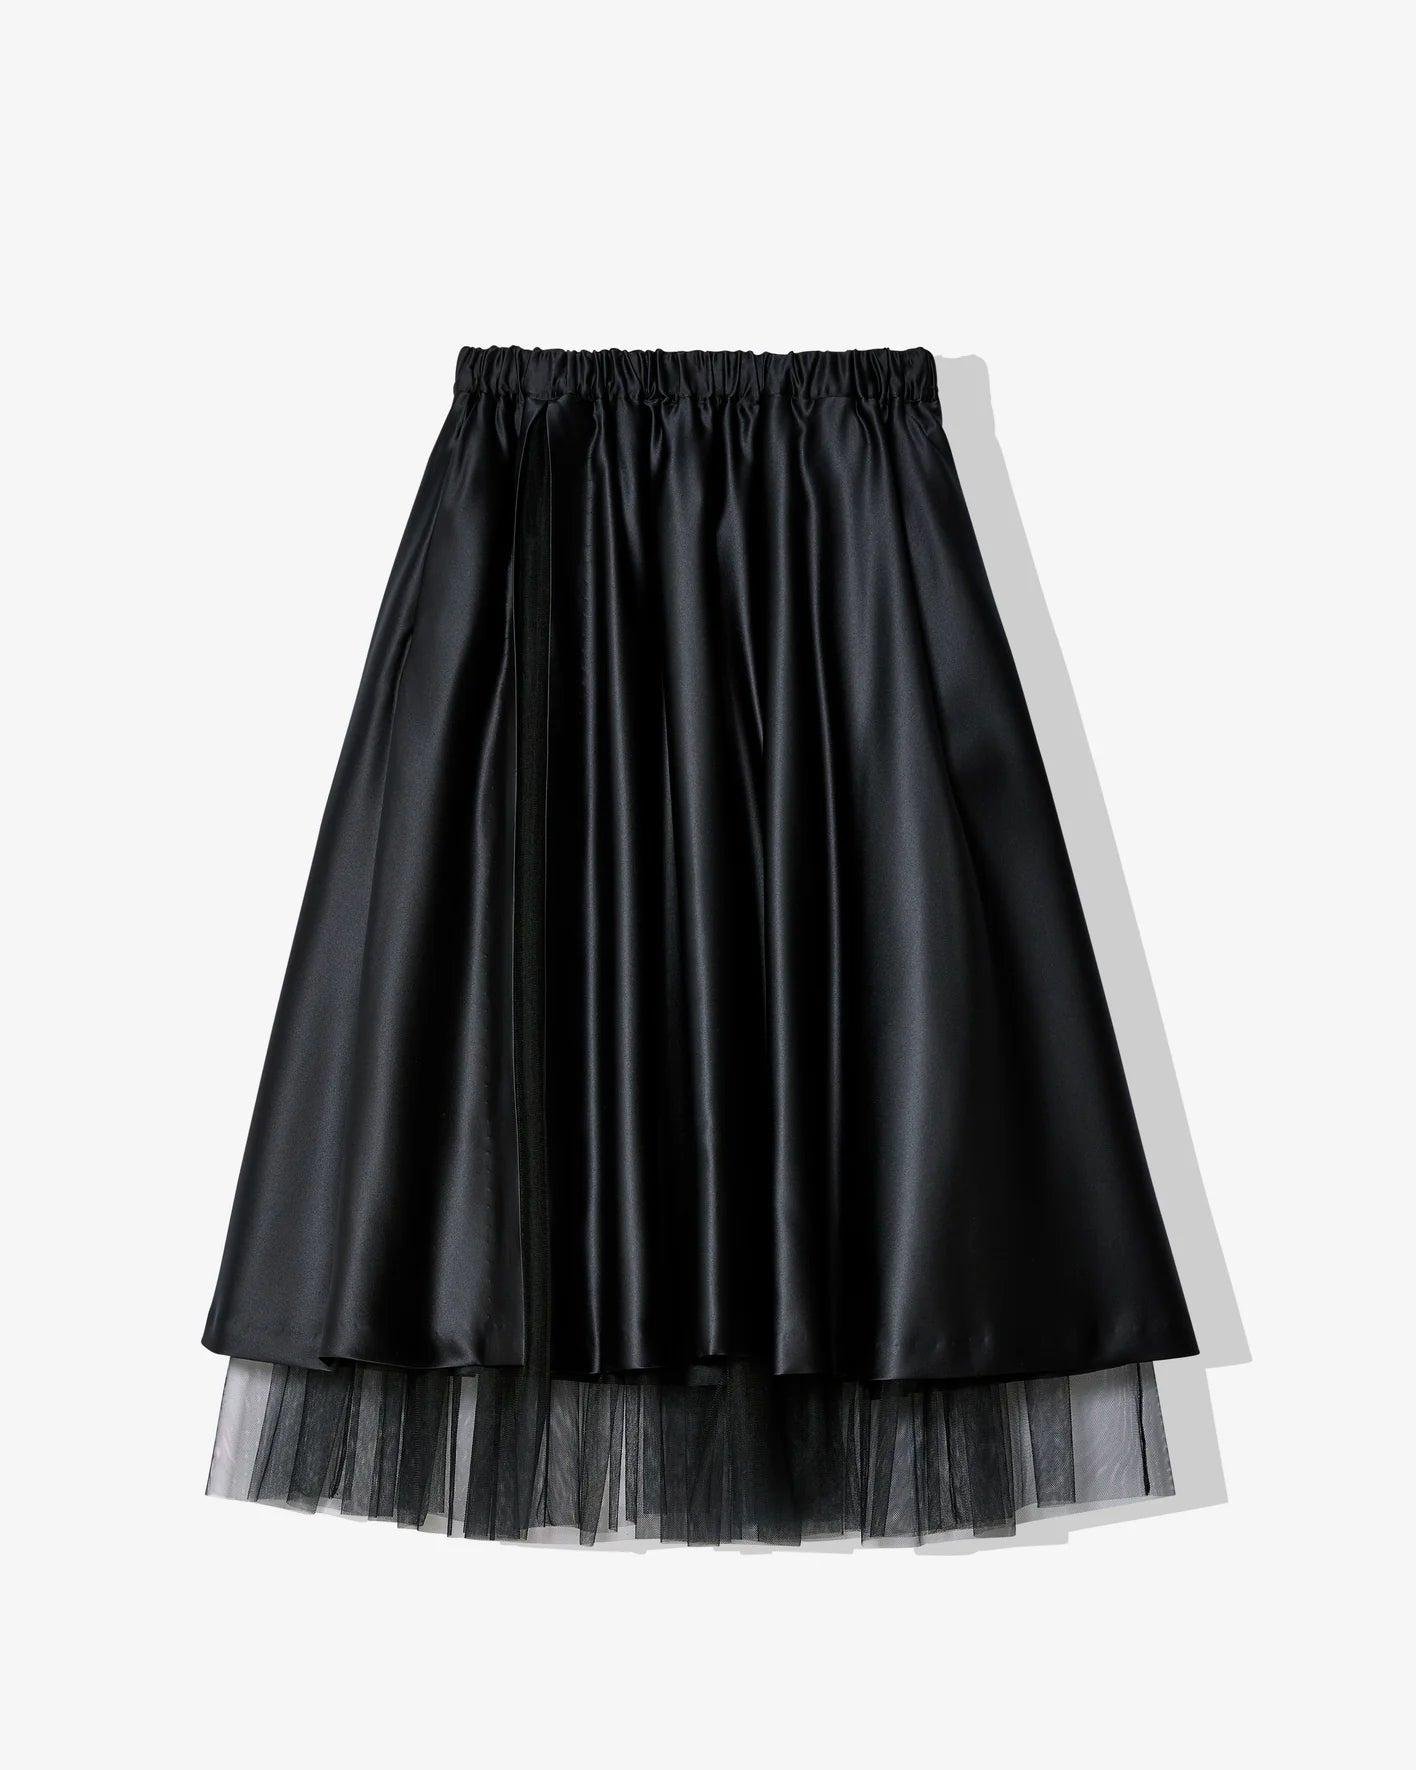 Noir Kei Ninomiya - Women's Tulle Underneath Skirt - (1 Black) by NOIR KEI NINOMIYA